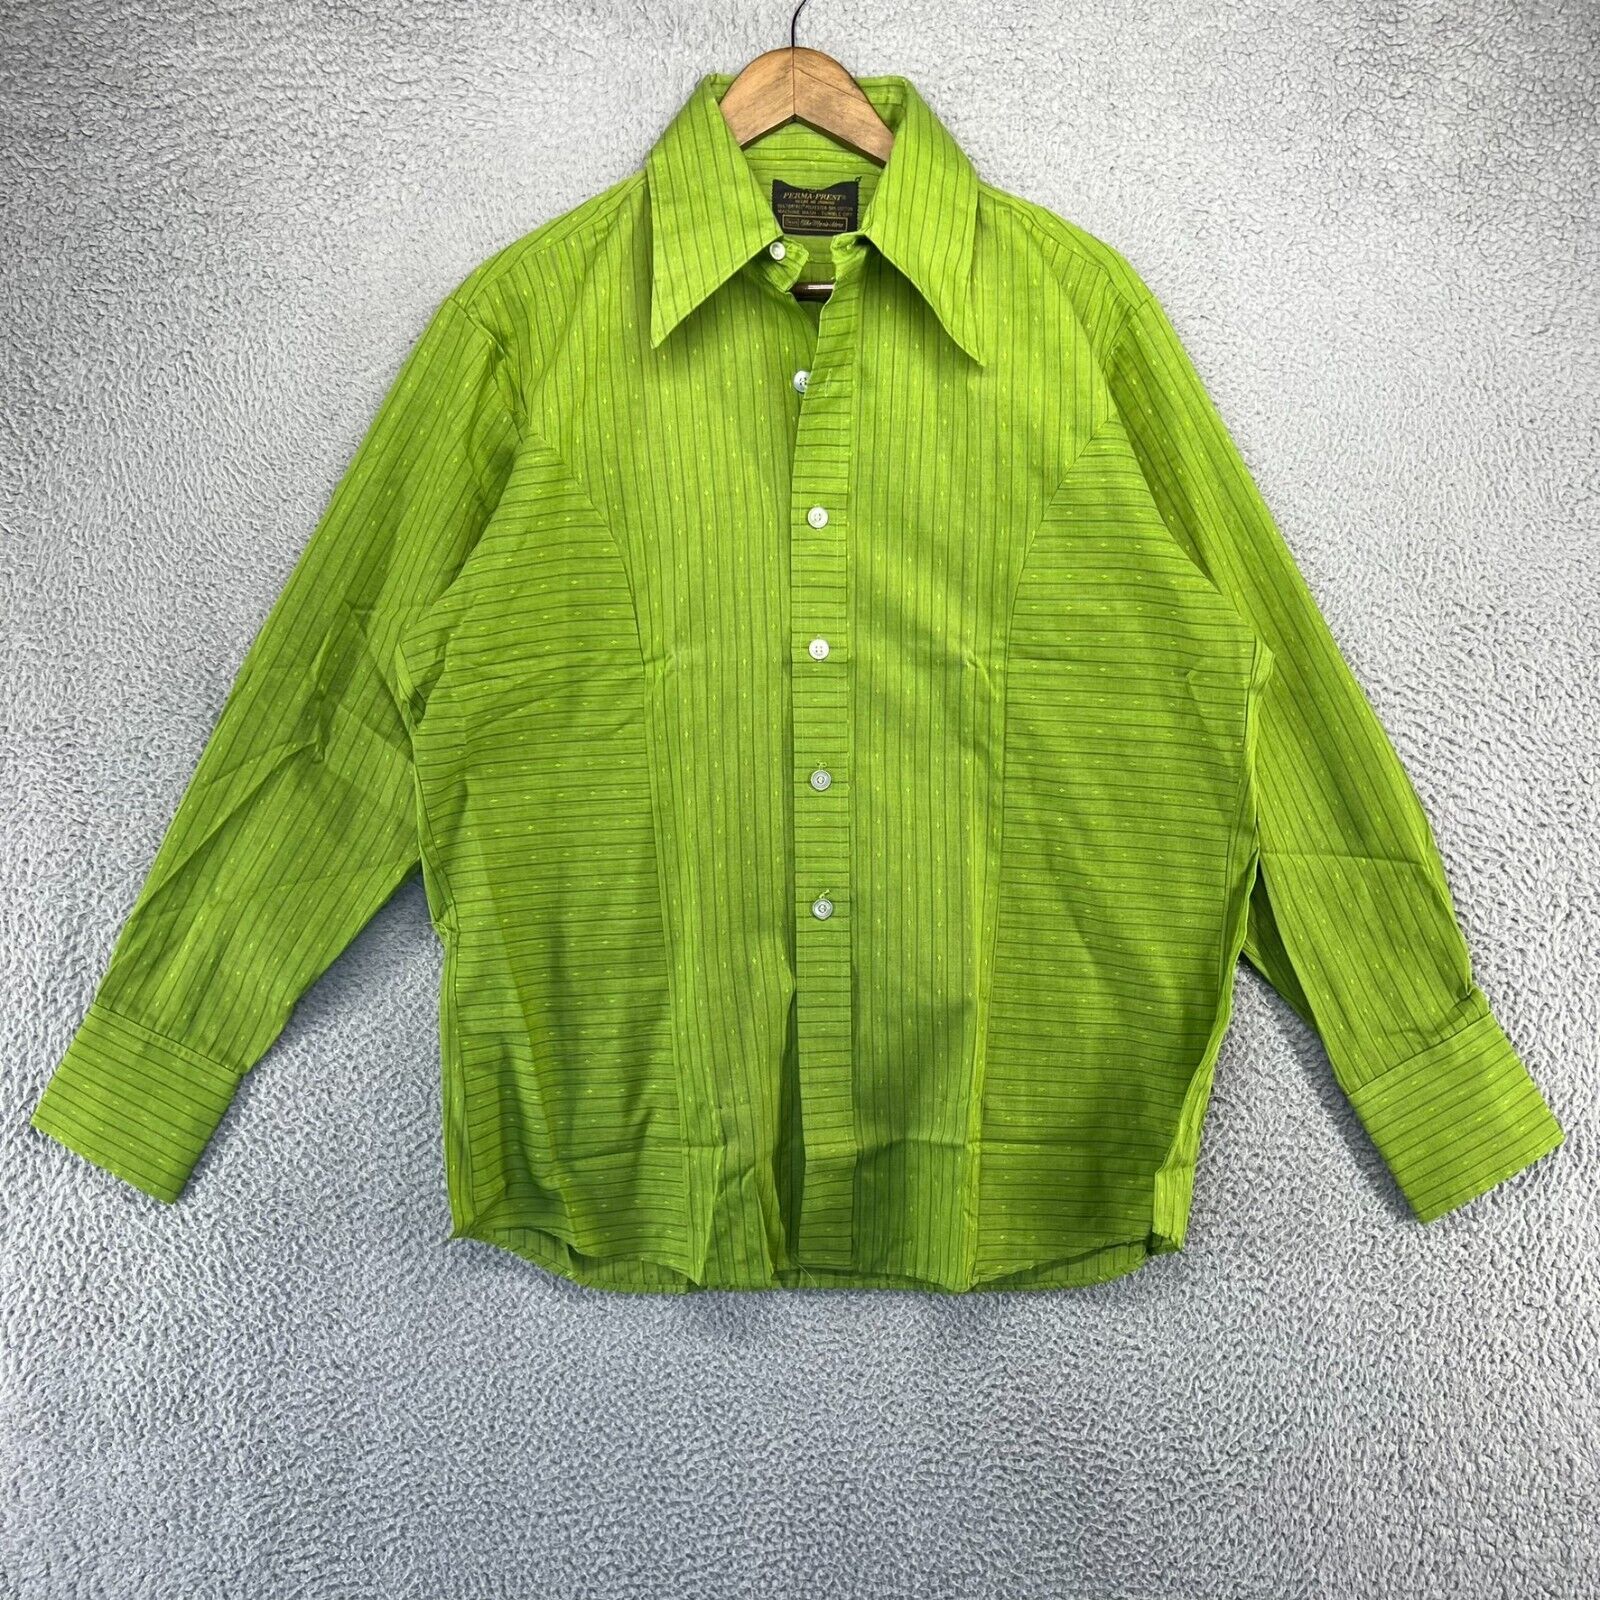 Vintage Sears Perma Prest Shirt Men\'s Large Green Striped Diamond Geometric 70s